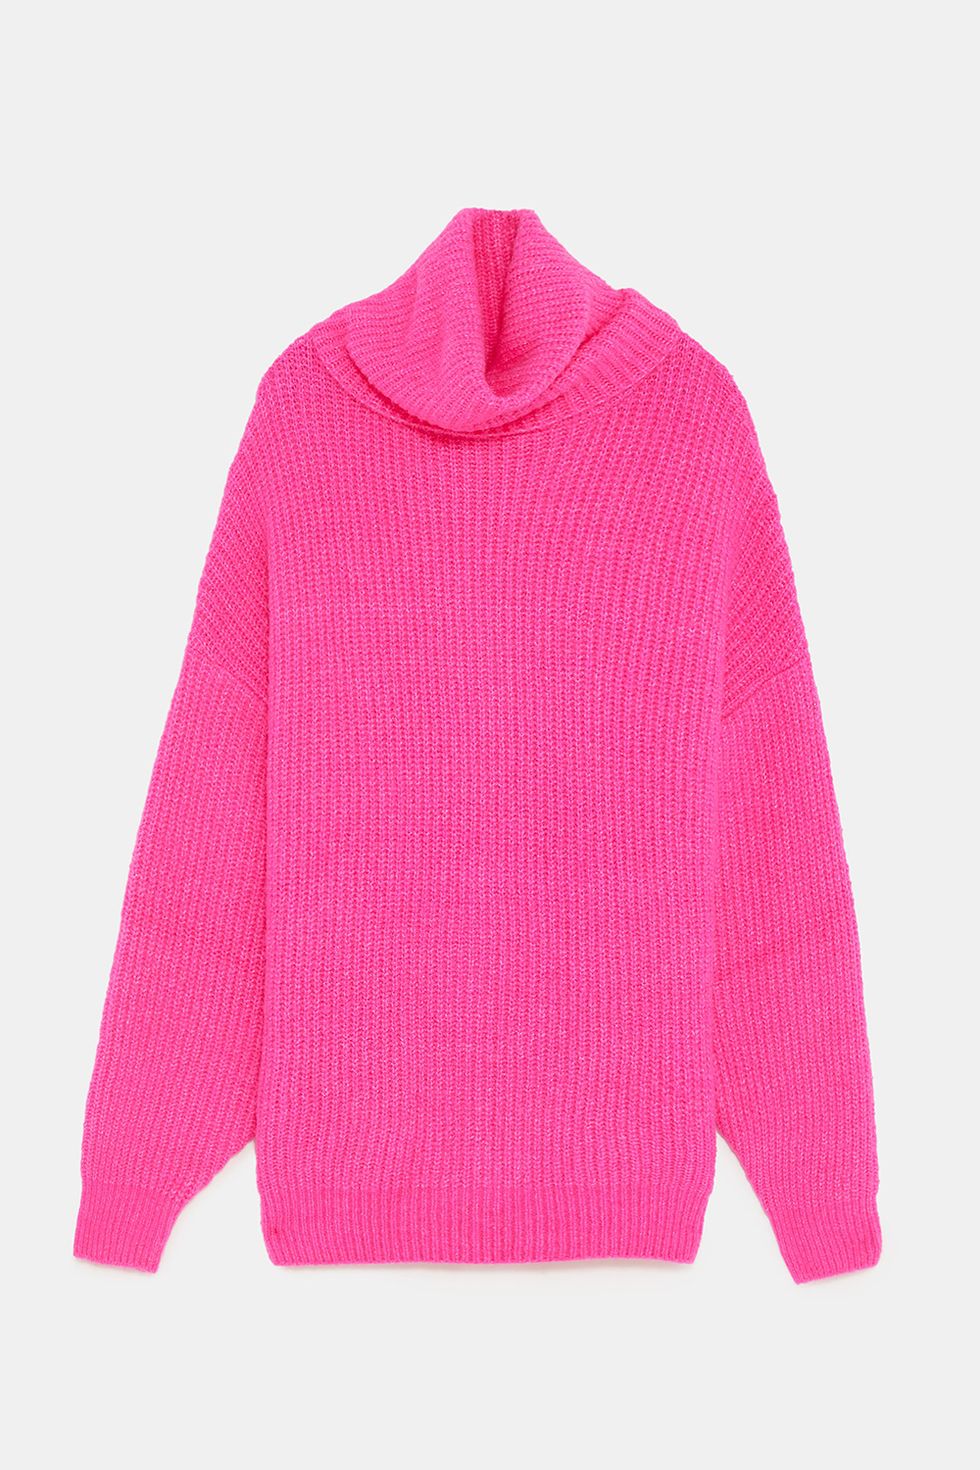 Clothing, Pink, Outerwear, Sleeve, Hood, Magenta, Woolen, Sweater, Wool, Neck, 